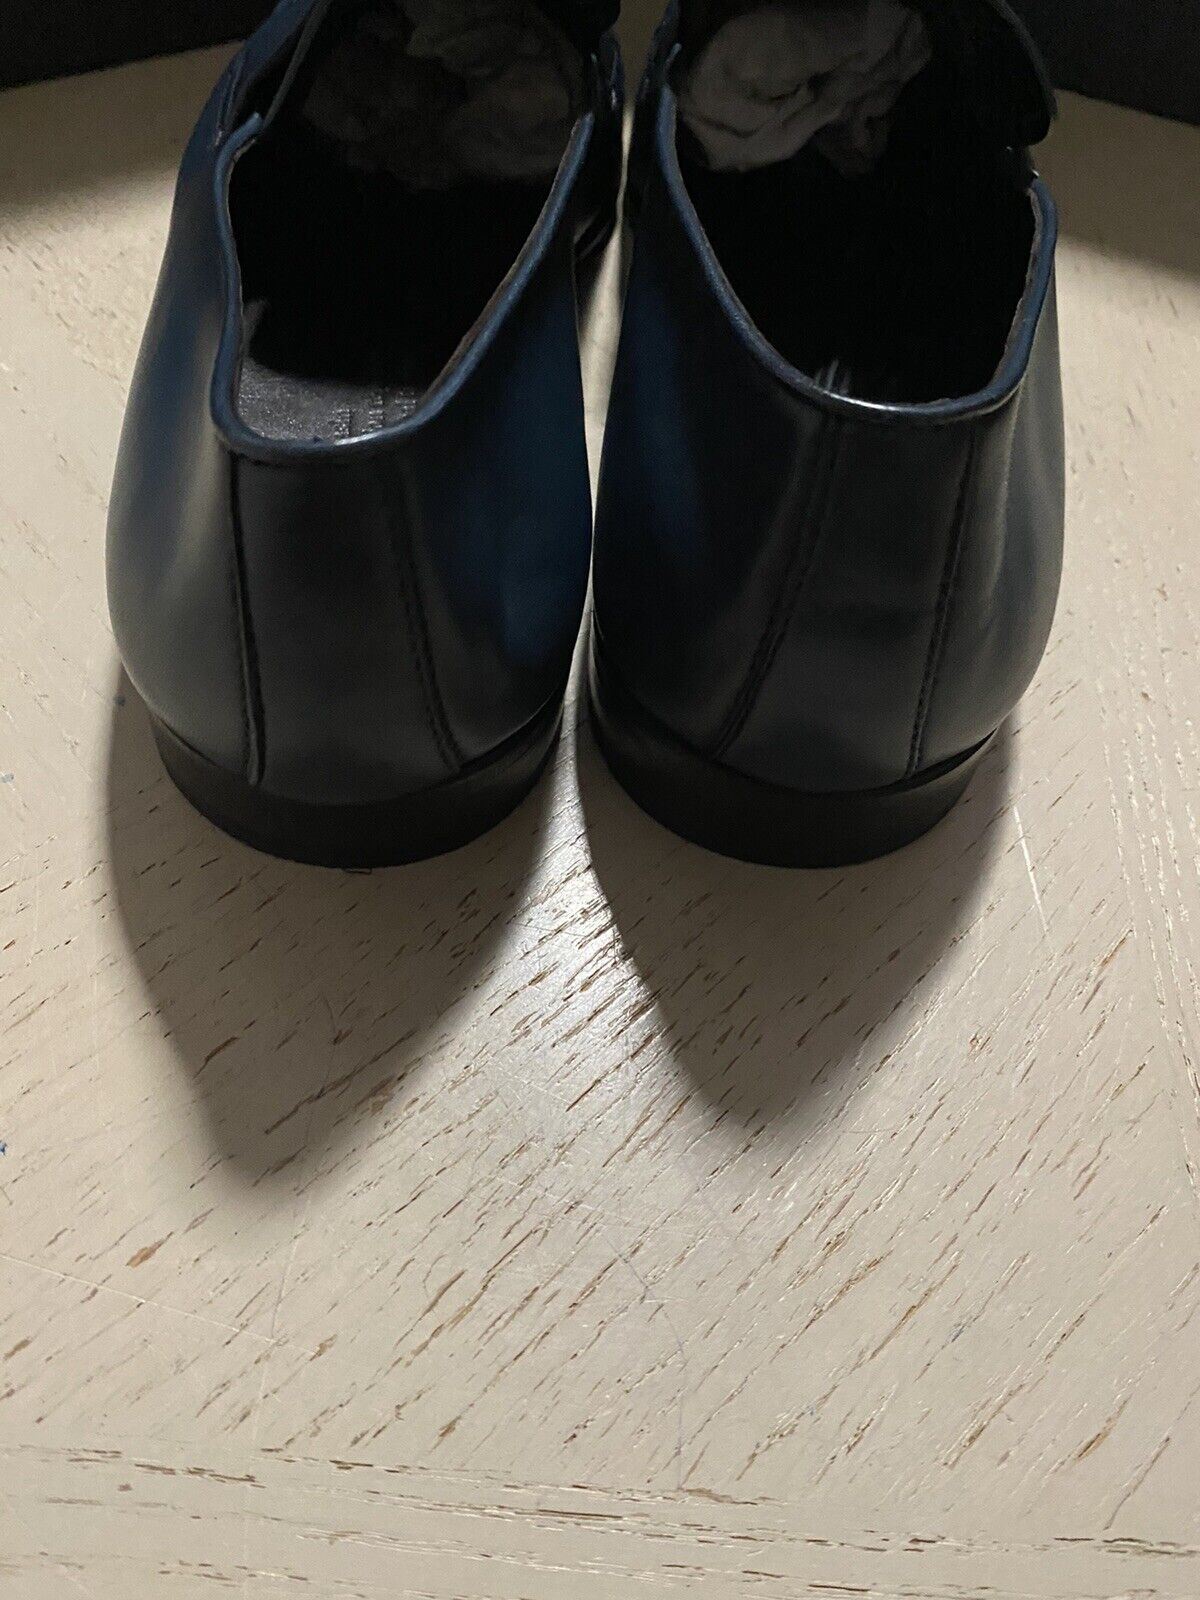 Neu $775 Ermenegildo Zegna Iconic Mokassin Leder Loafer Schuhe MD Blau 10 US